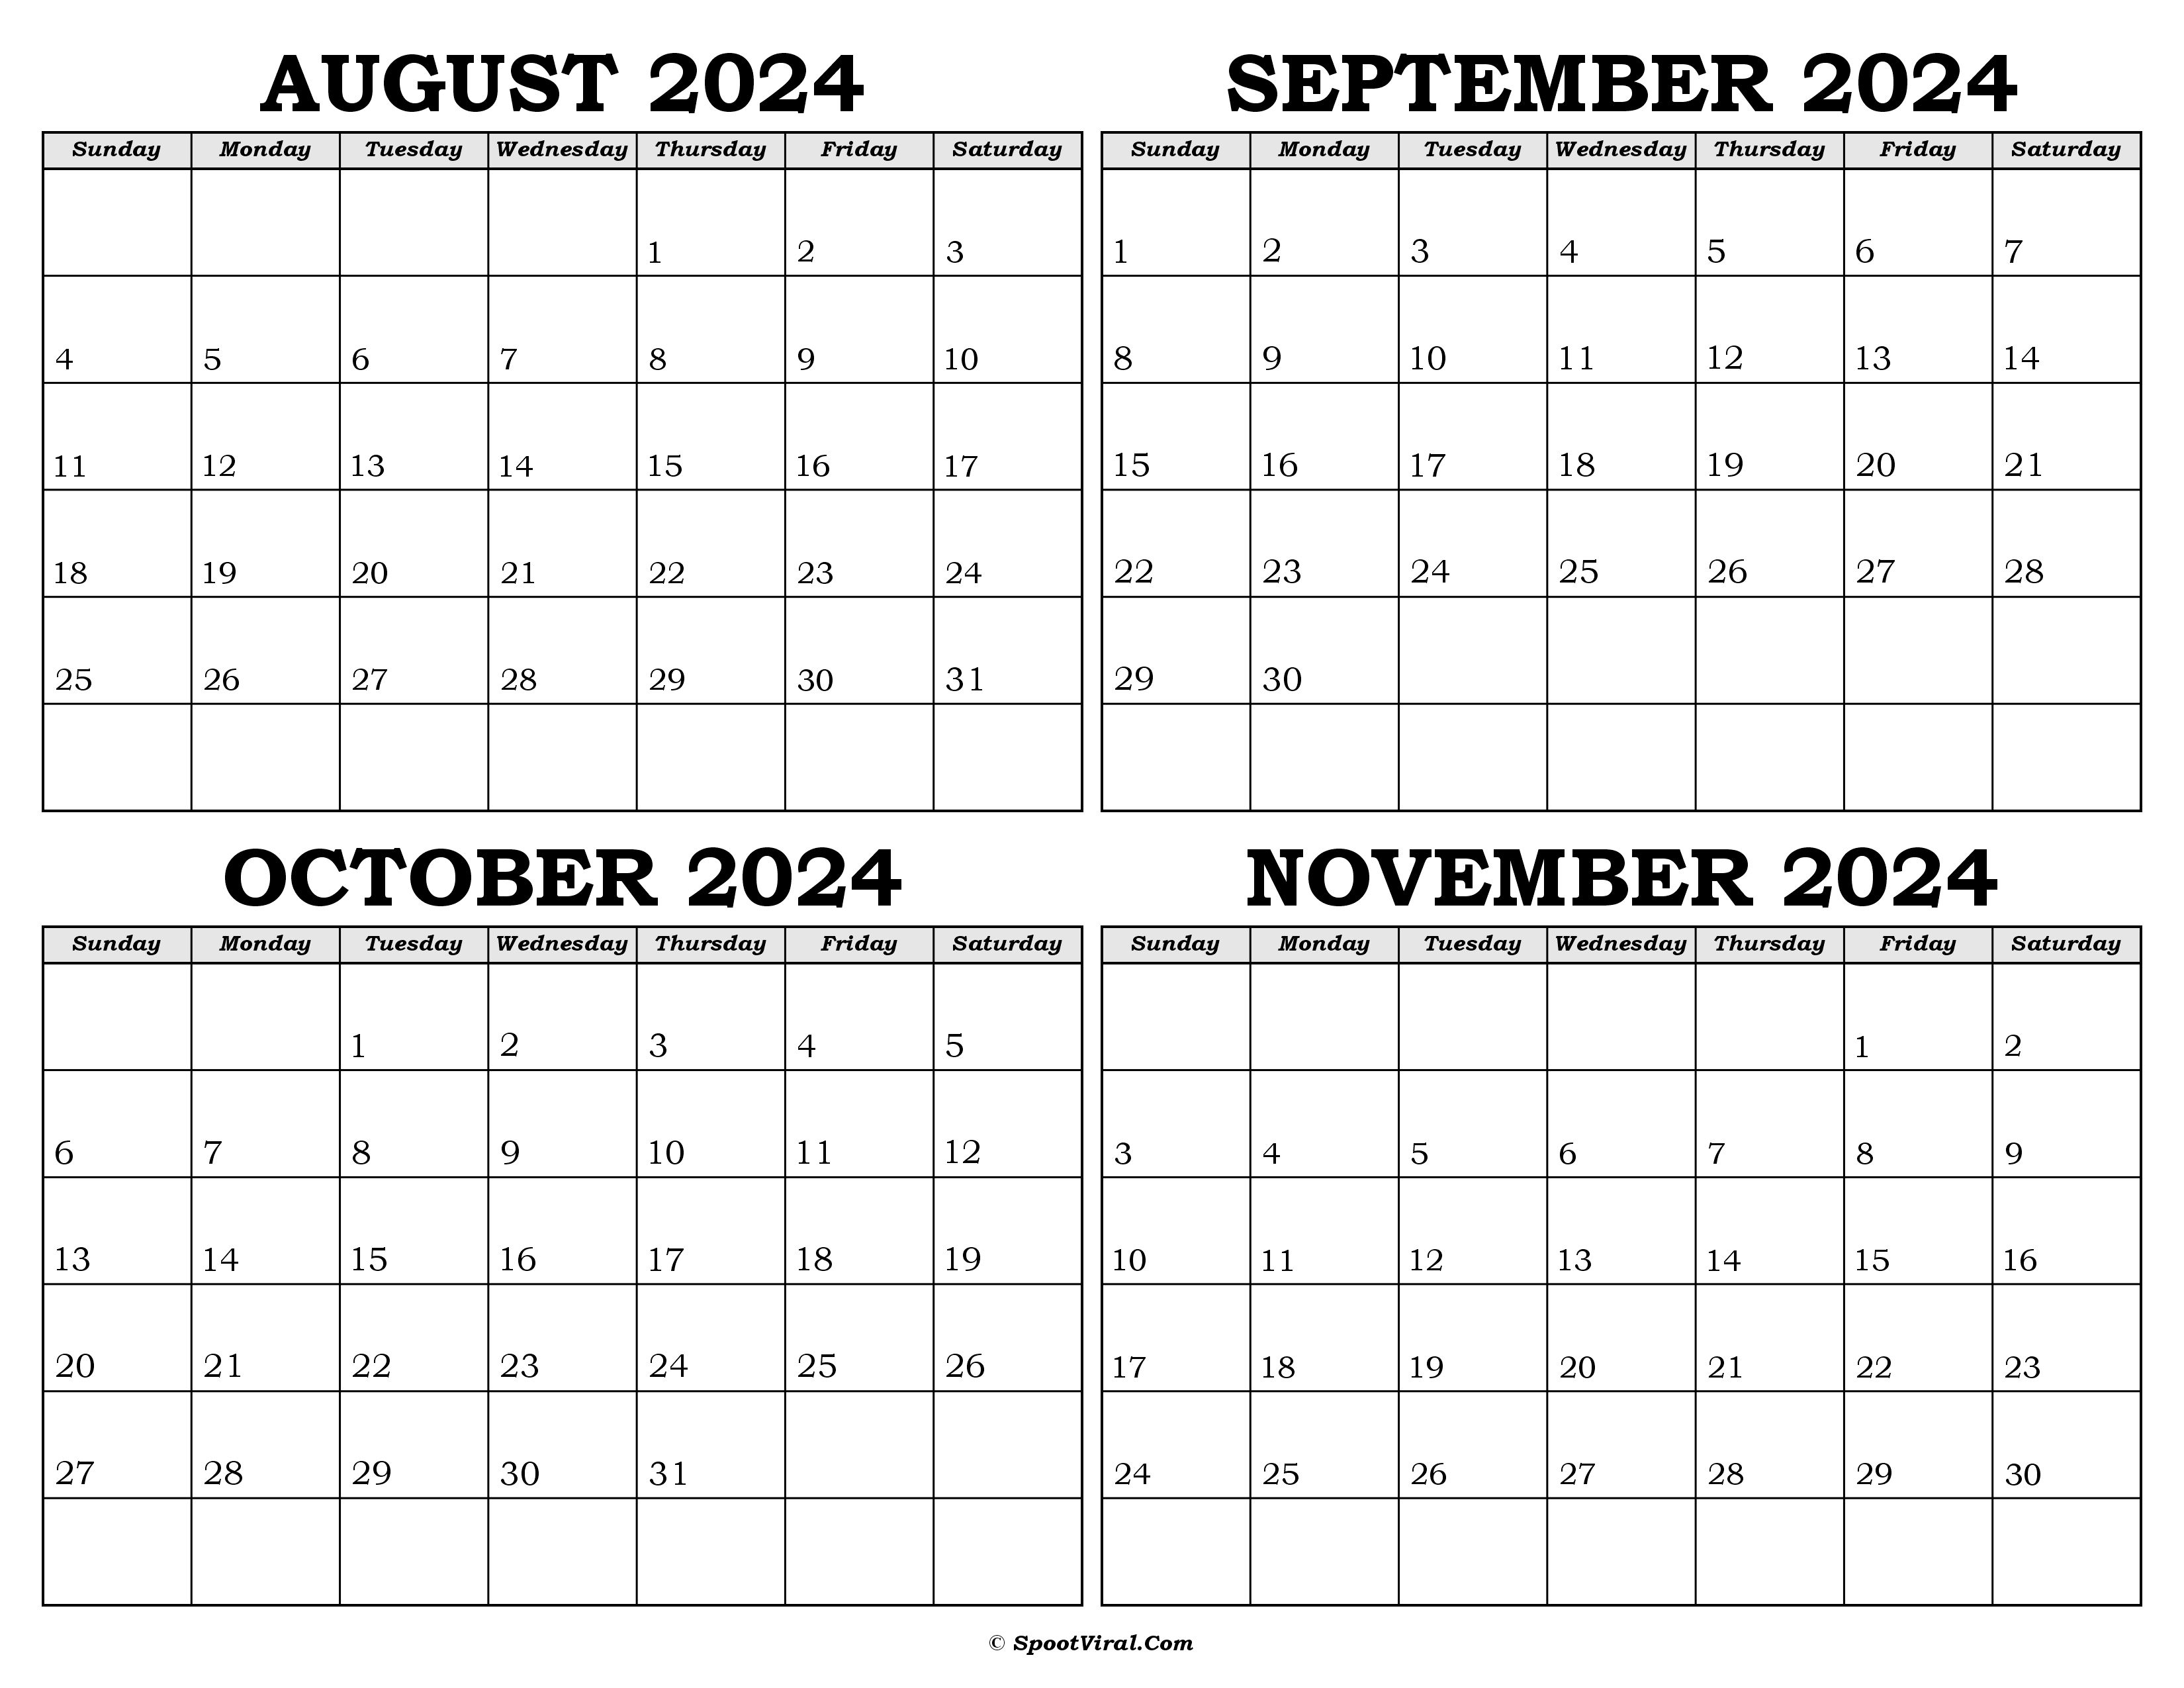 Calendar August to November 2024